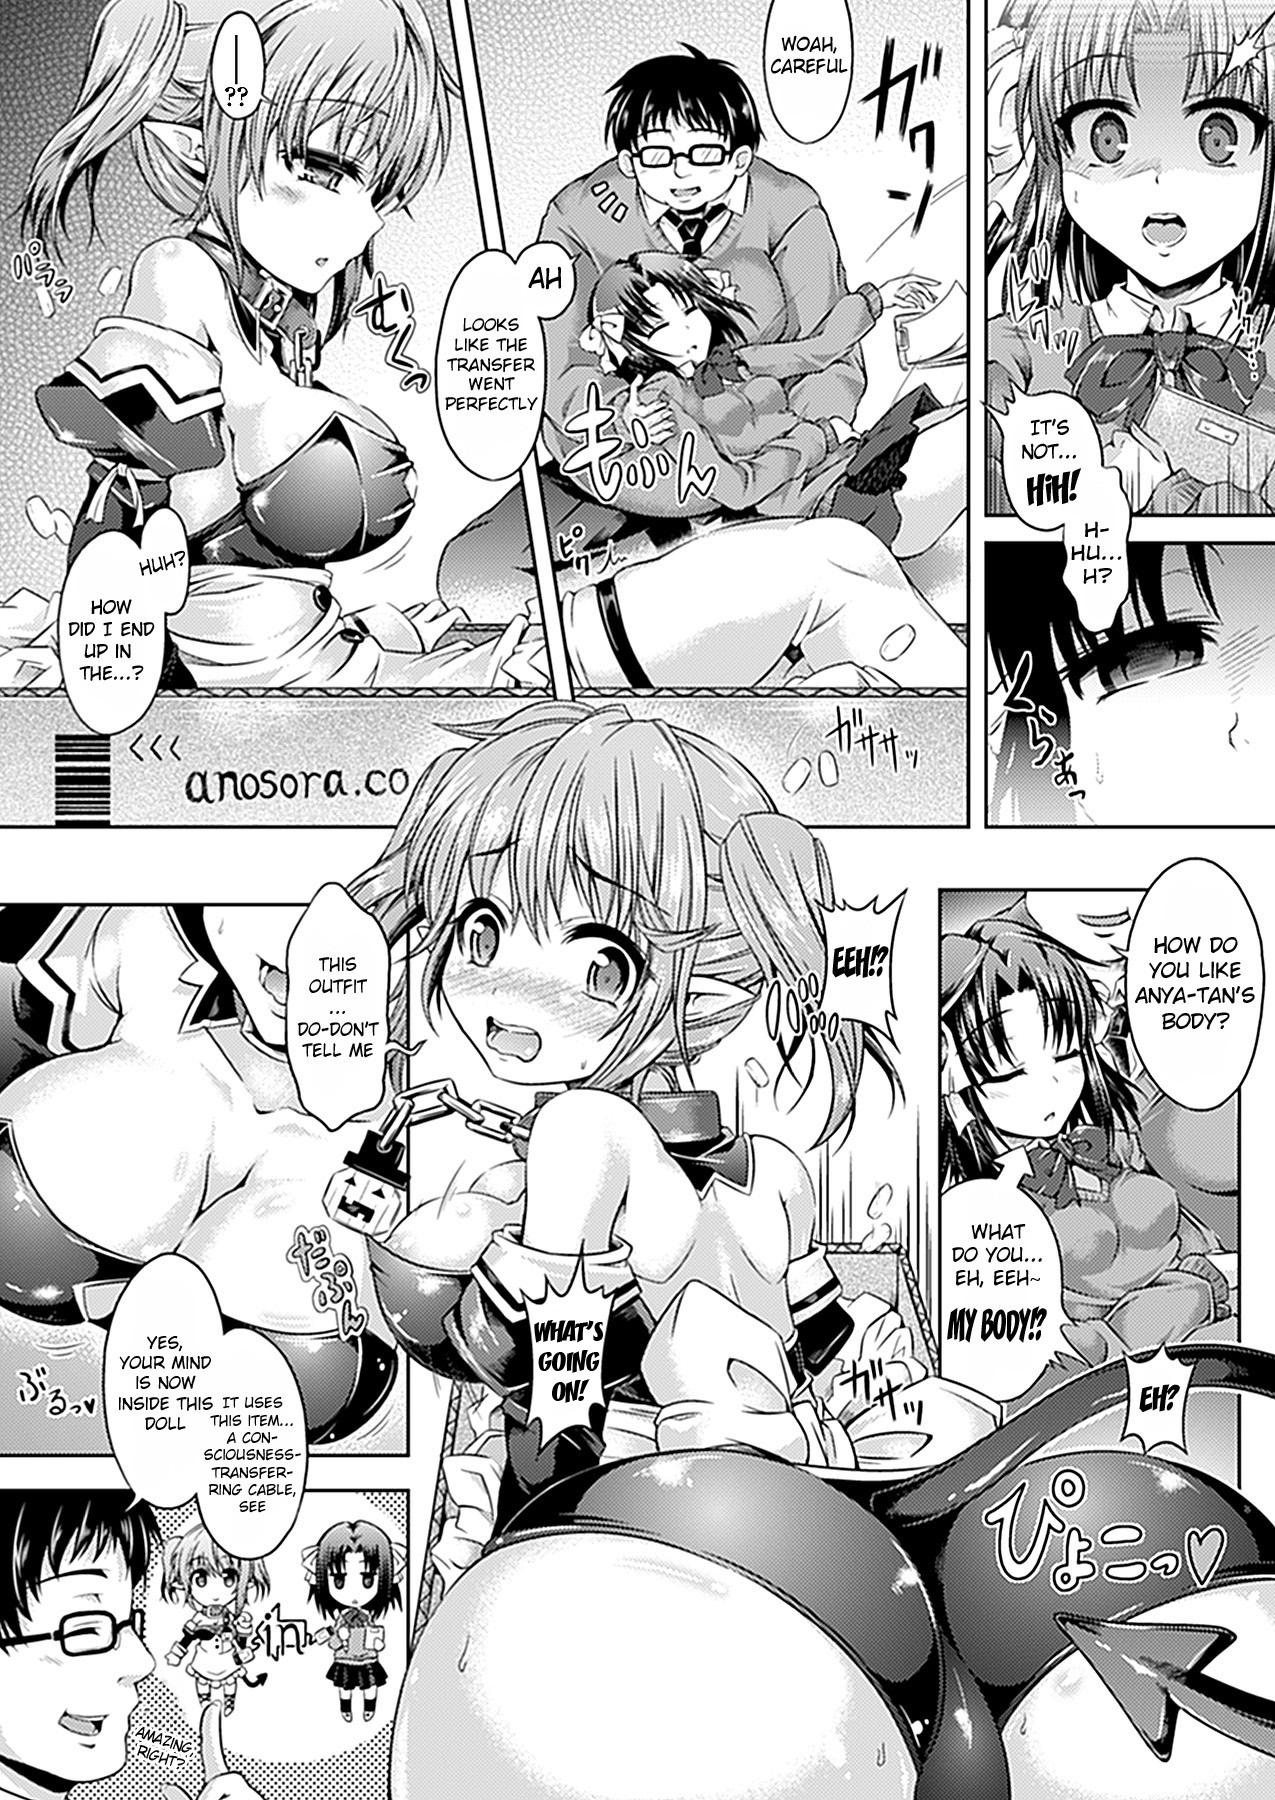 [Taniguchi-san] Girl Play - Trans-Sexual Fiction the Girls Play - ⚤TSF Catalog (English) {doujin-moe.us} 5